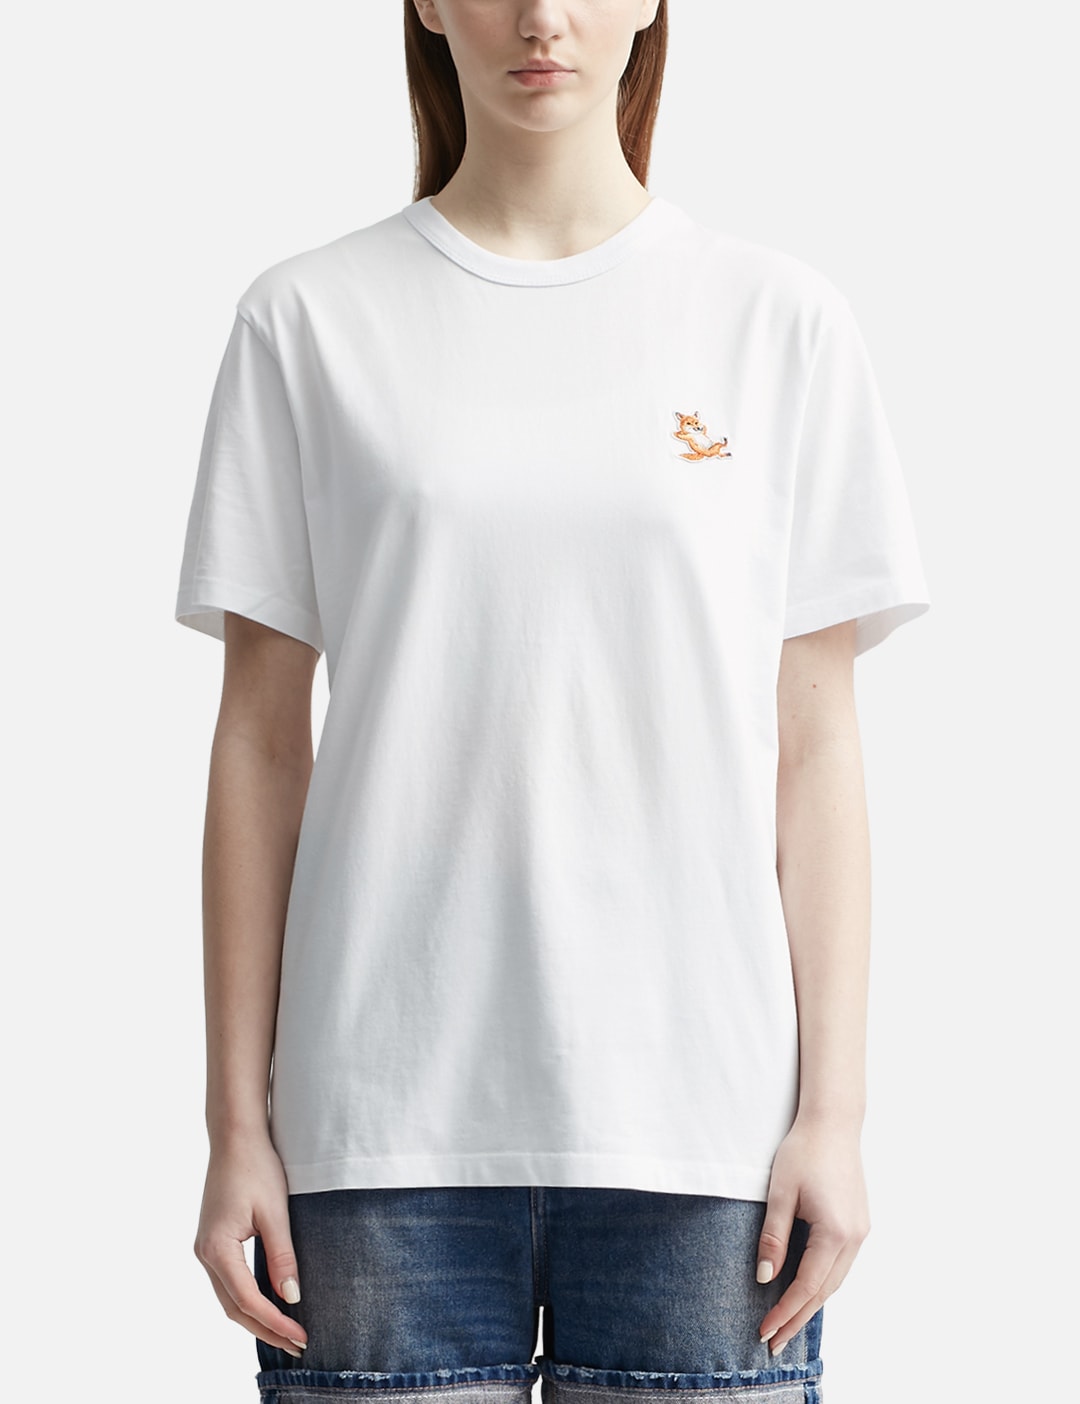 Maison Kitsuné - Chillax Fox Patch Classic T-shirt | HBX - Globally ...